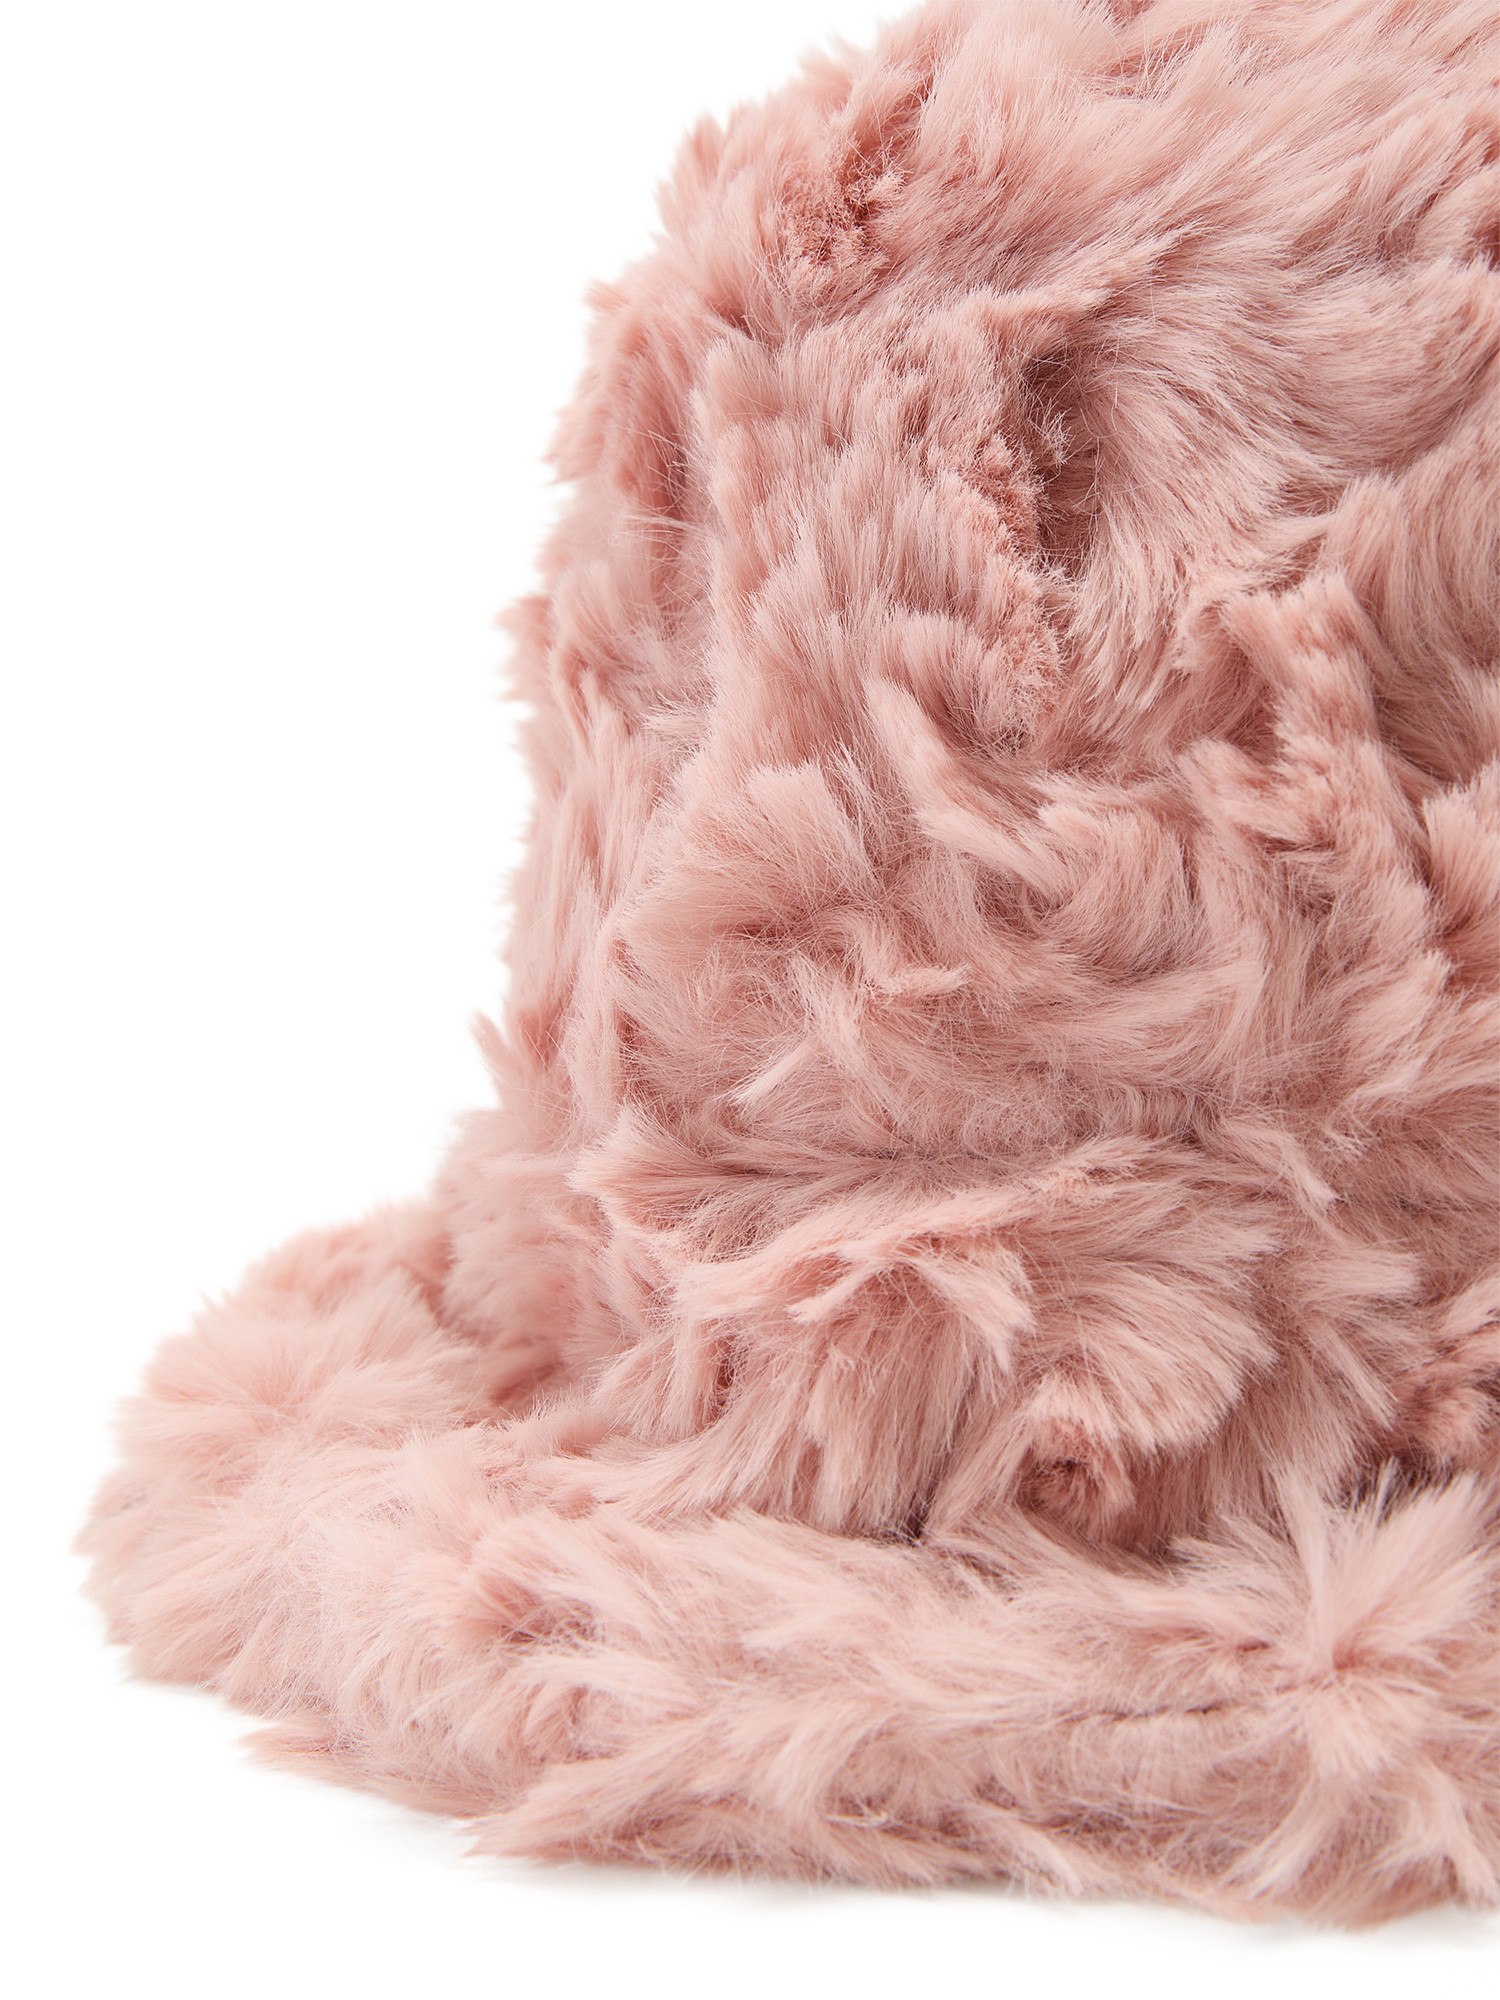 Koan - Eco fur cloche hat, Pink, large image number 1